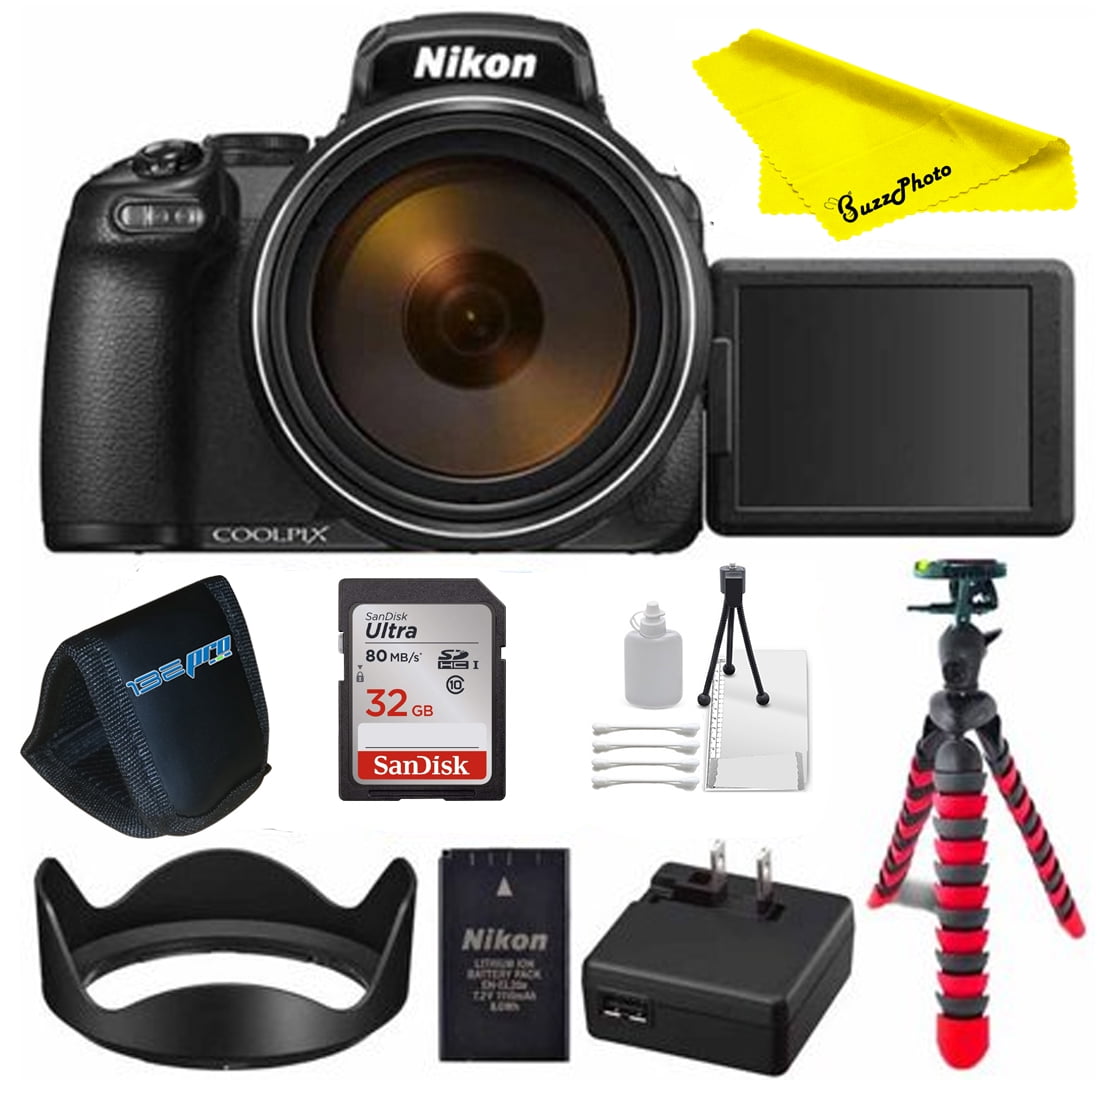 Nikon CoolPix P1000 Digital Camera - Gene's Camera Store